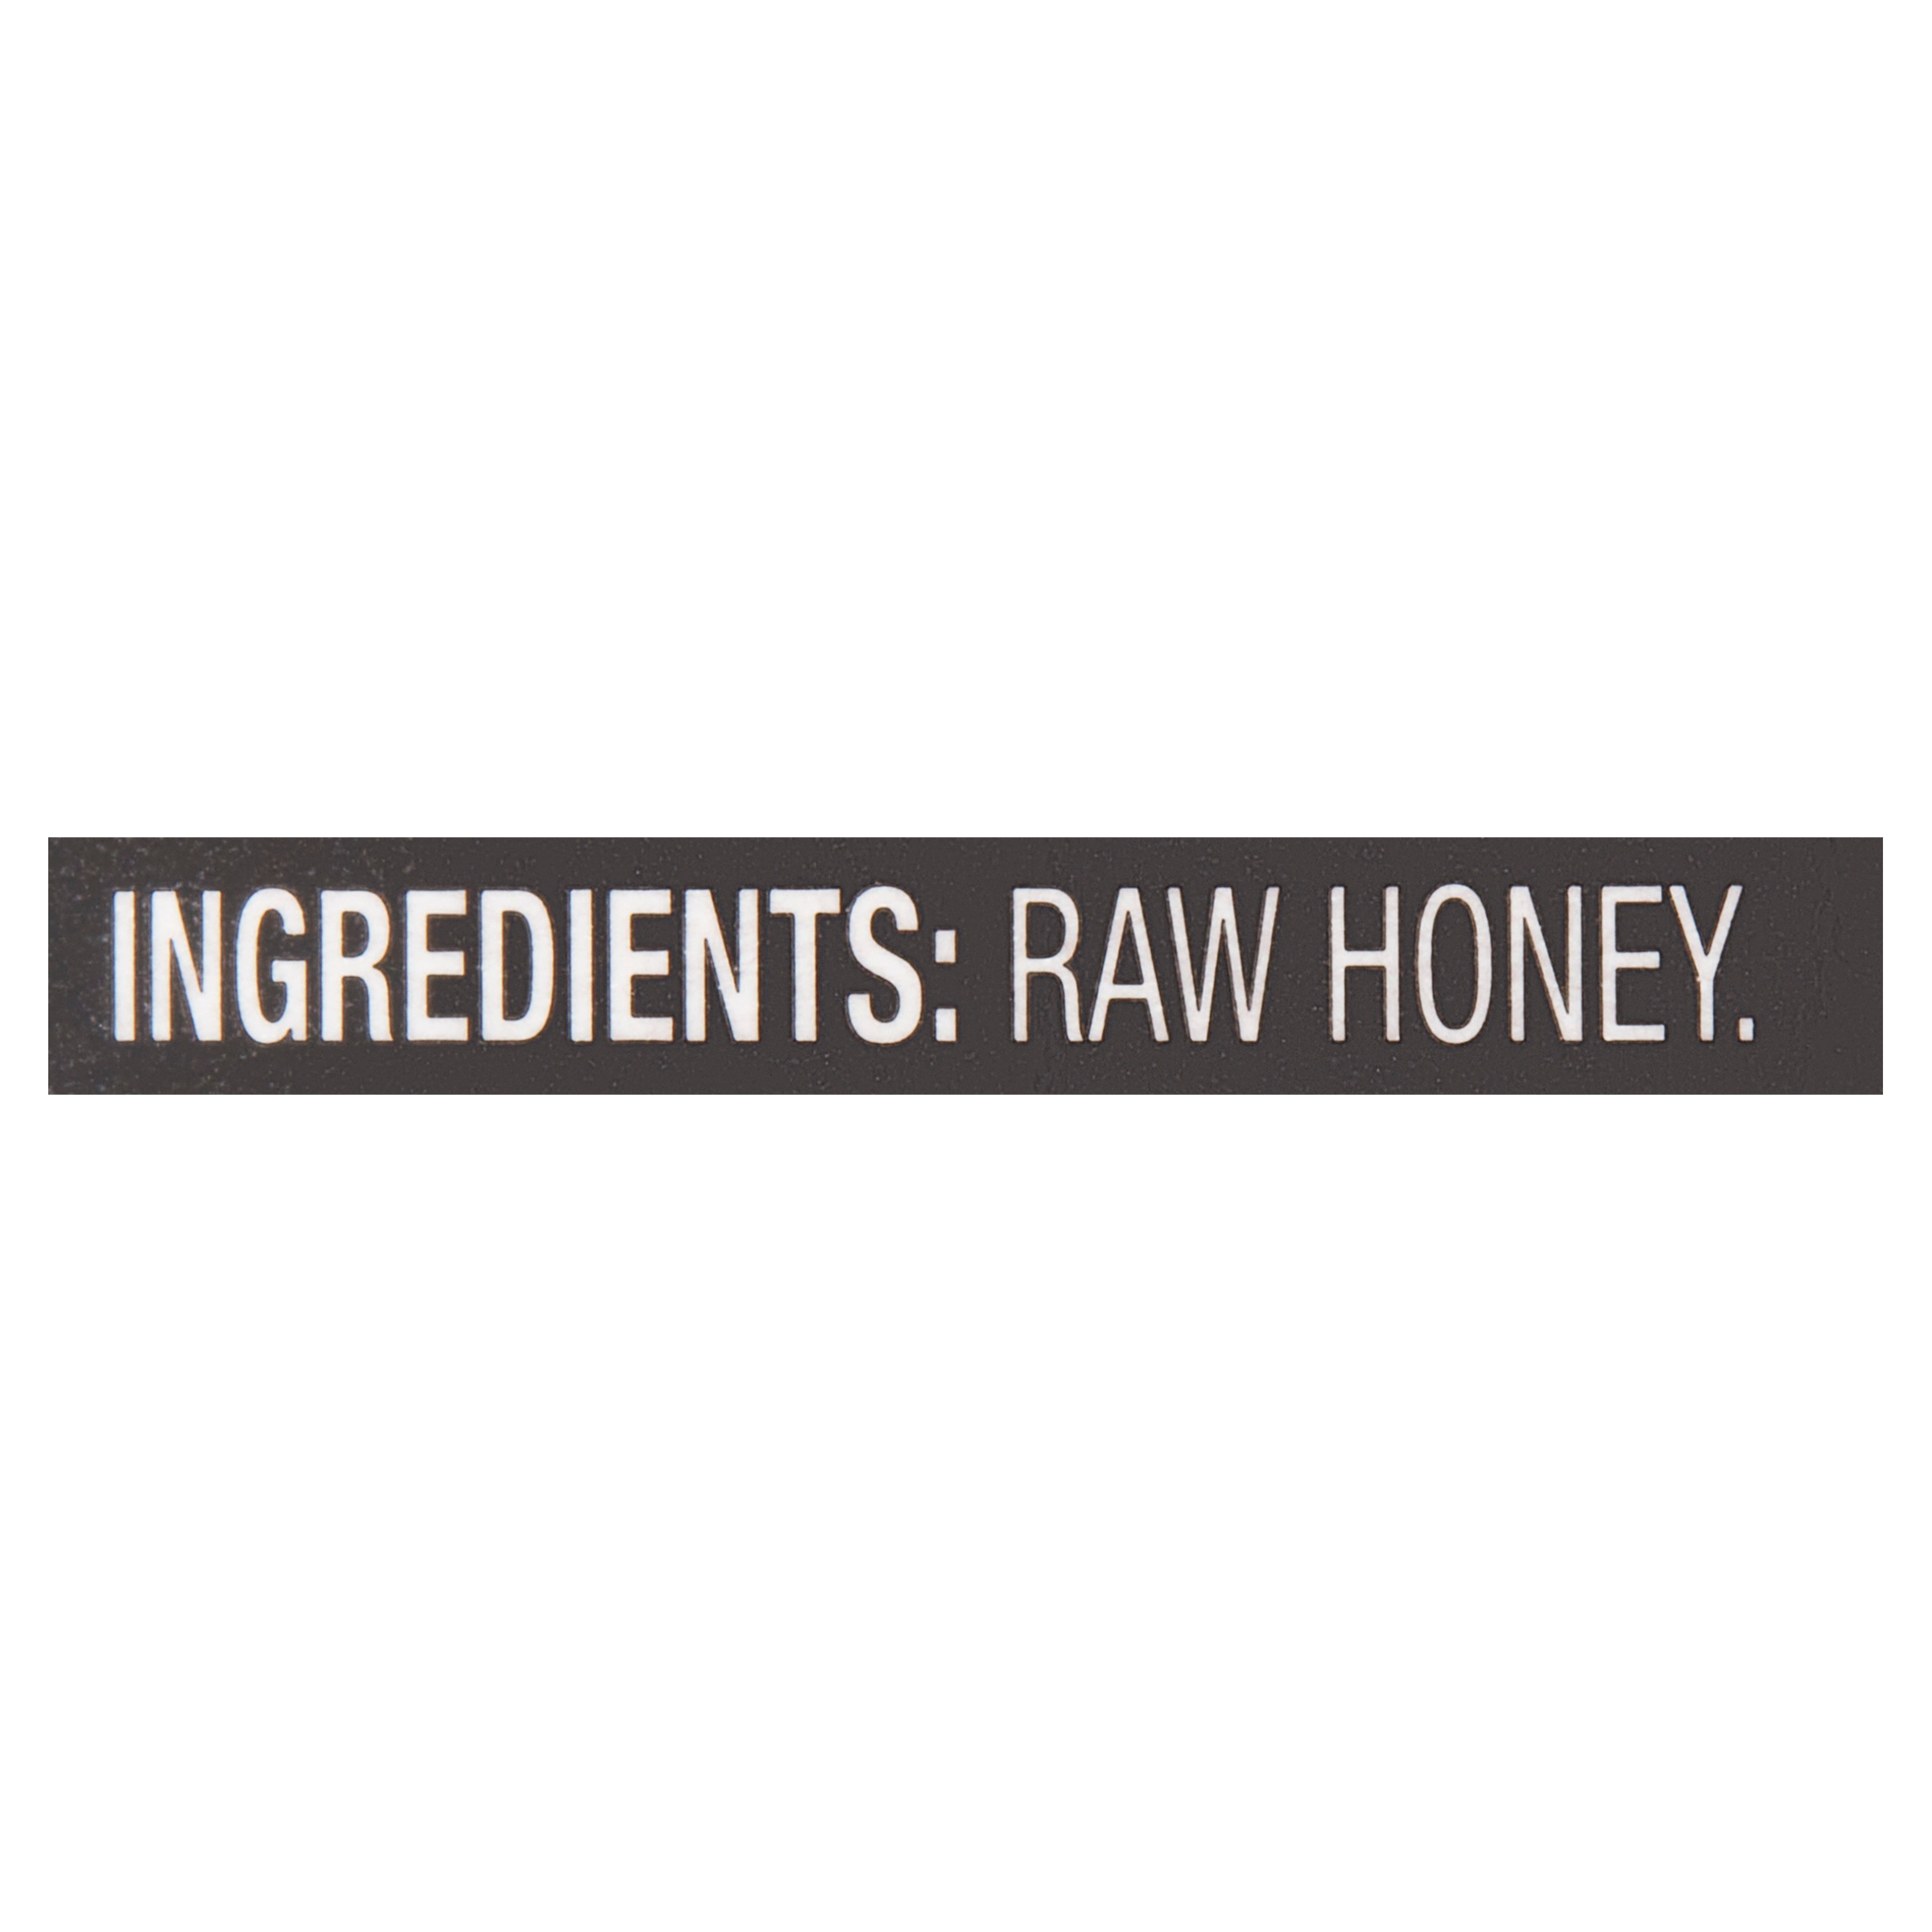 Great Value, Raw Honey, 16 oz Inverted Plastic Bottle, No Allergens - image 4 of 7